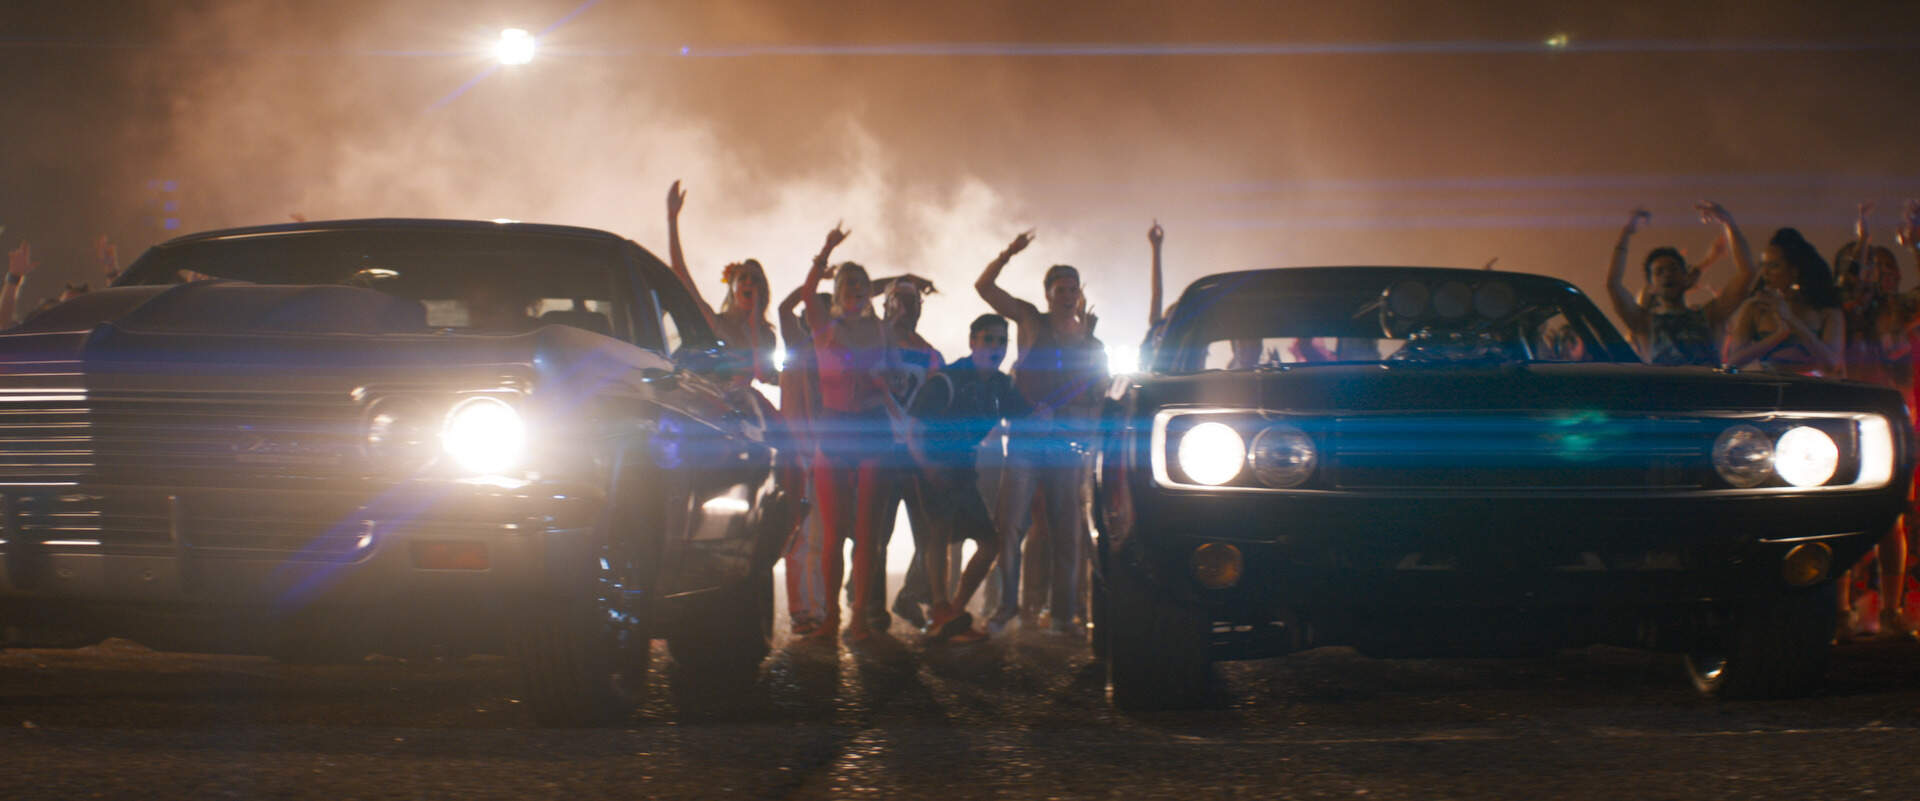 Fast + Furious 10 - Szenenbild 25 von 26